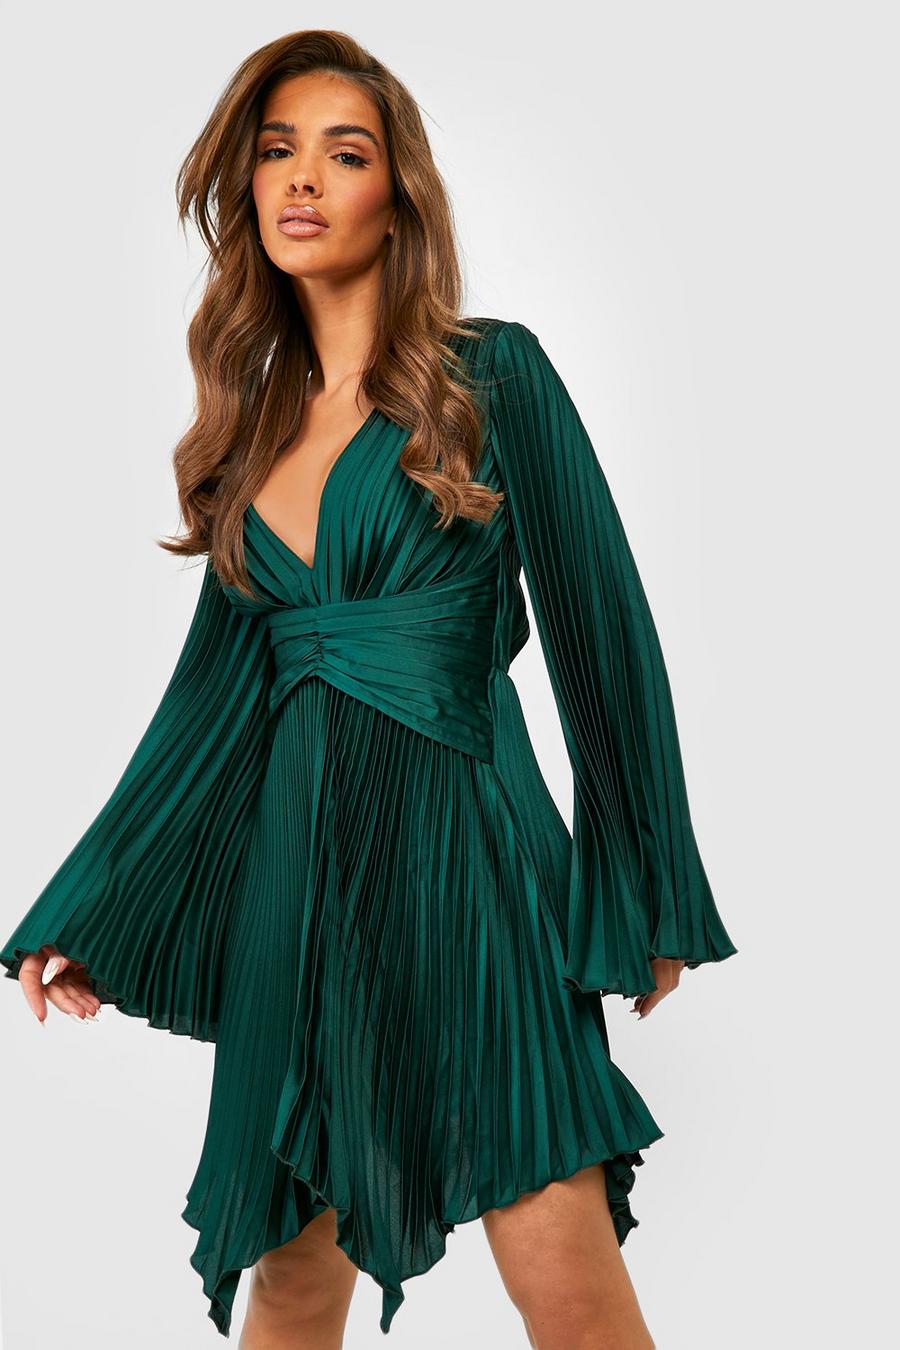 Emerald gerde Satin Pleated Angel Sleeve Skater Dress